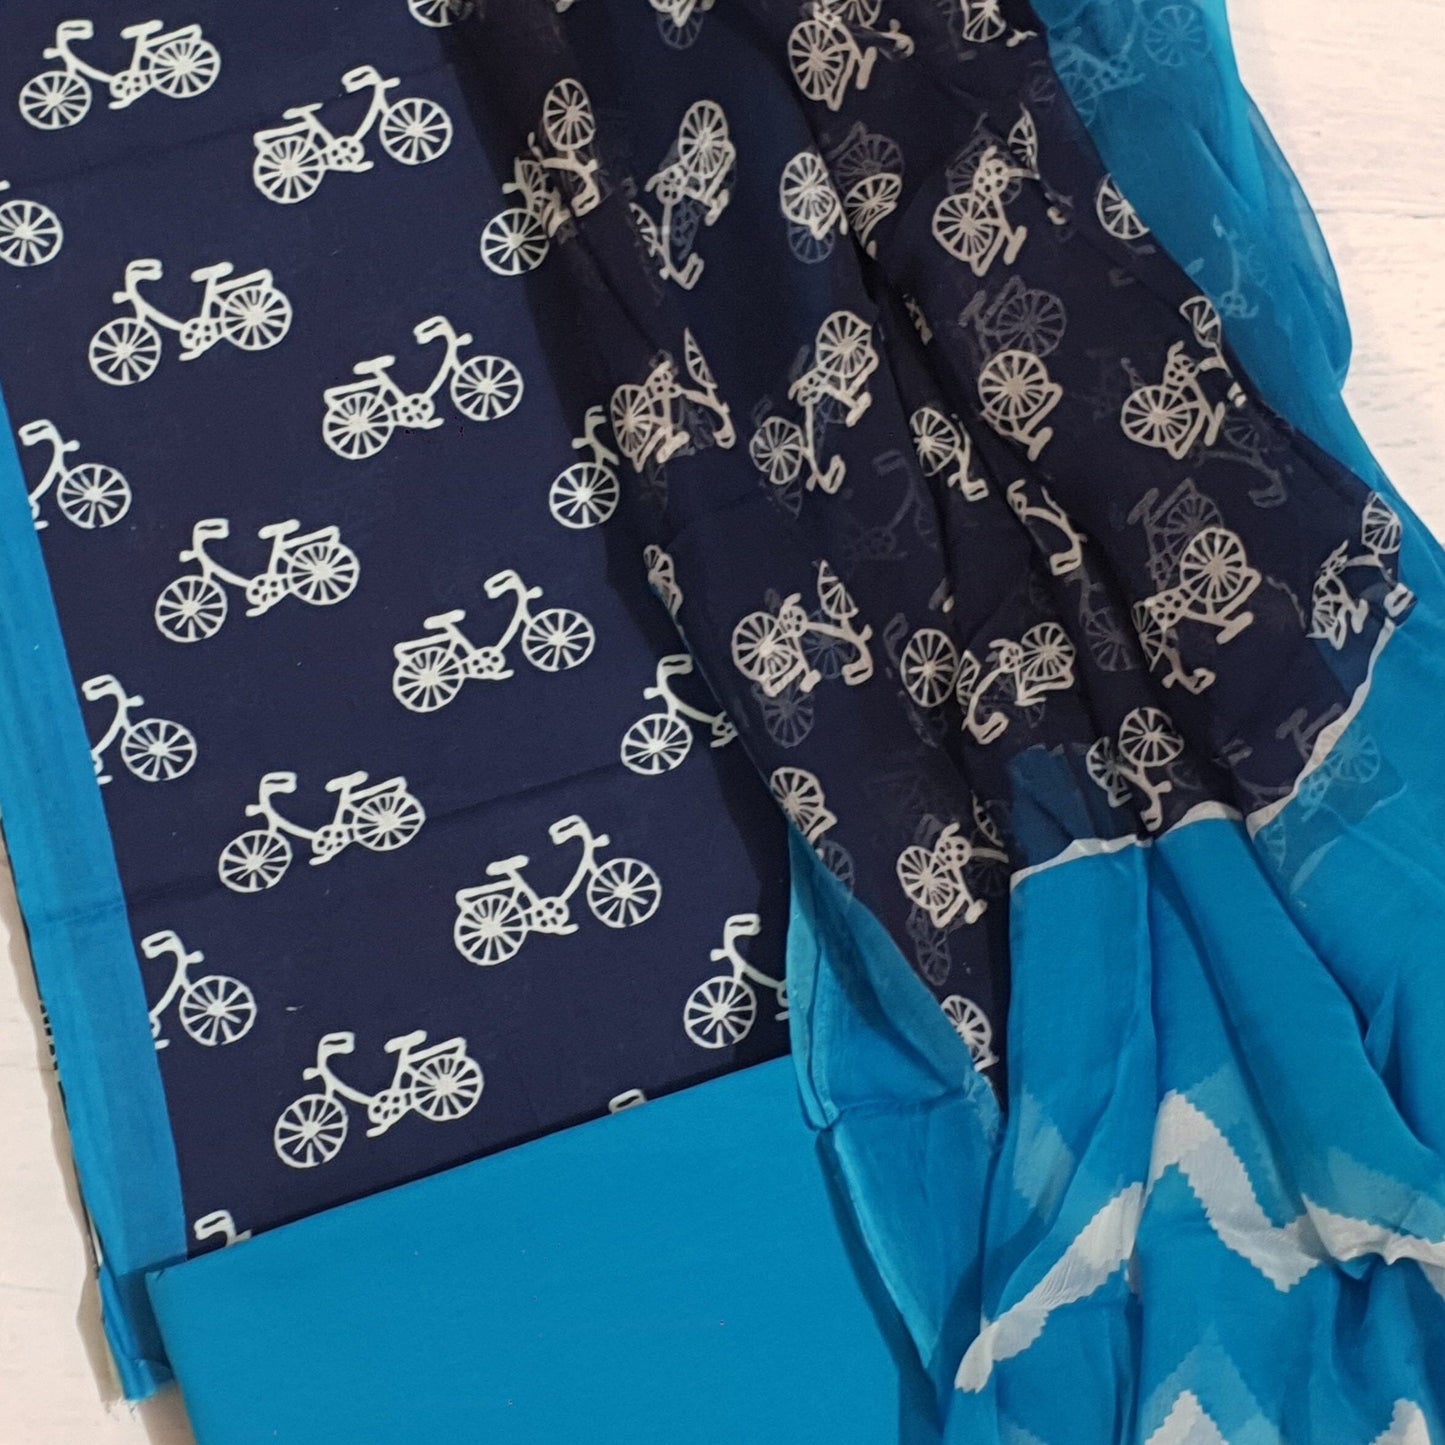 Cotton Block Print Dress material with Chiffon Dupatta in SALE